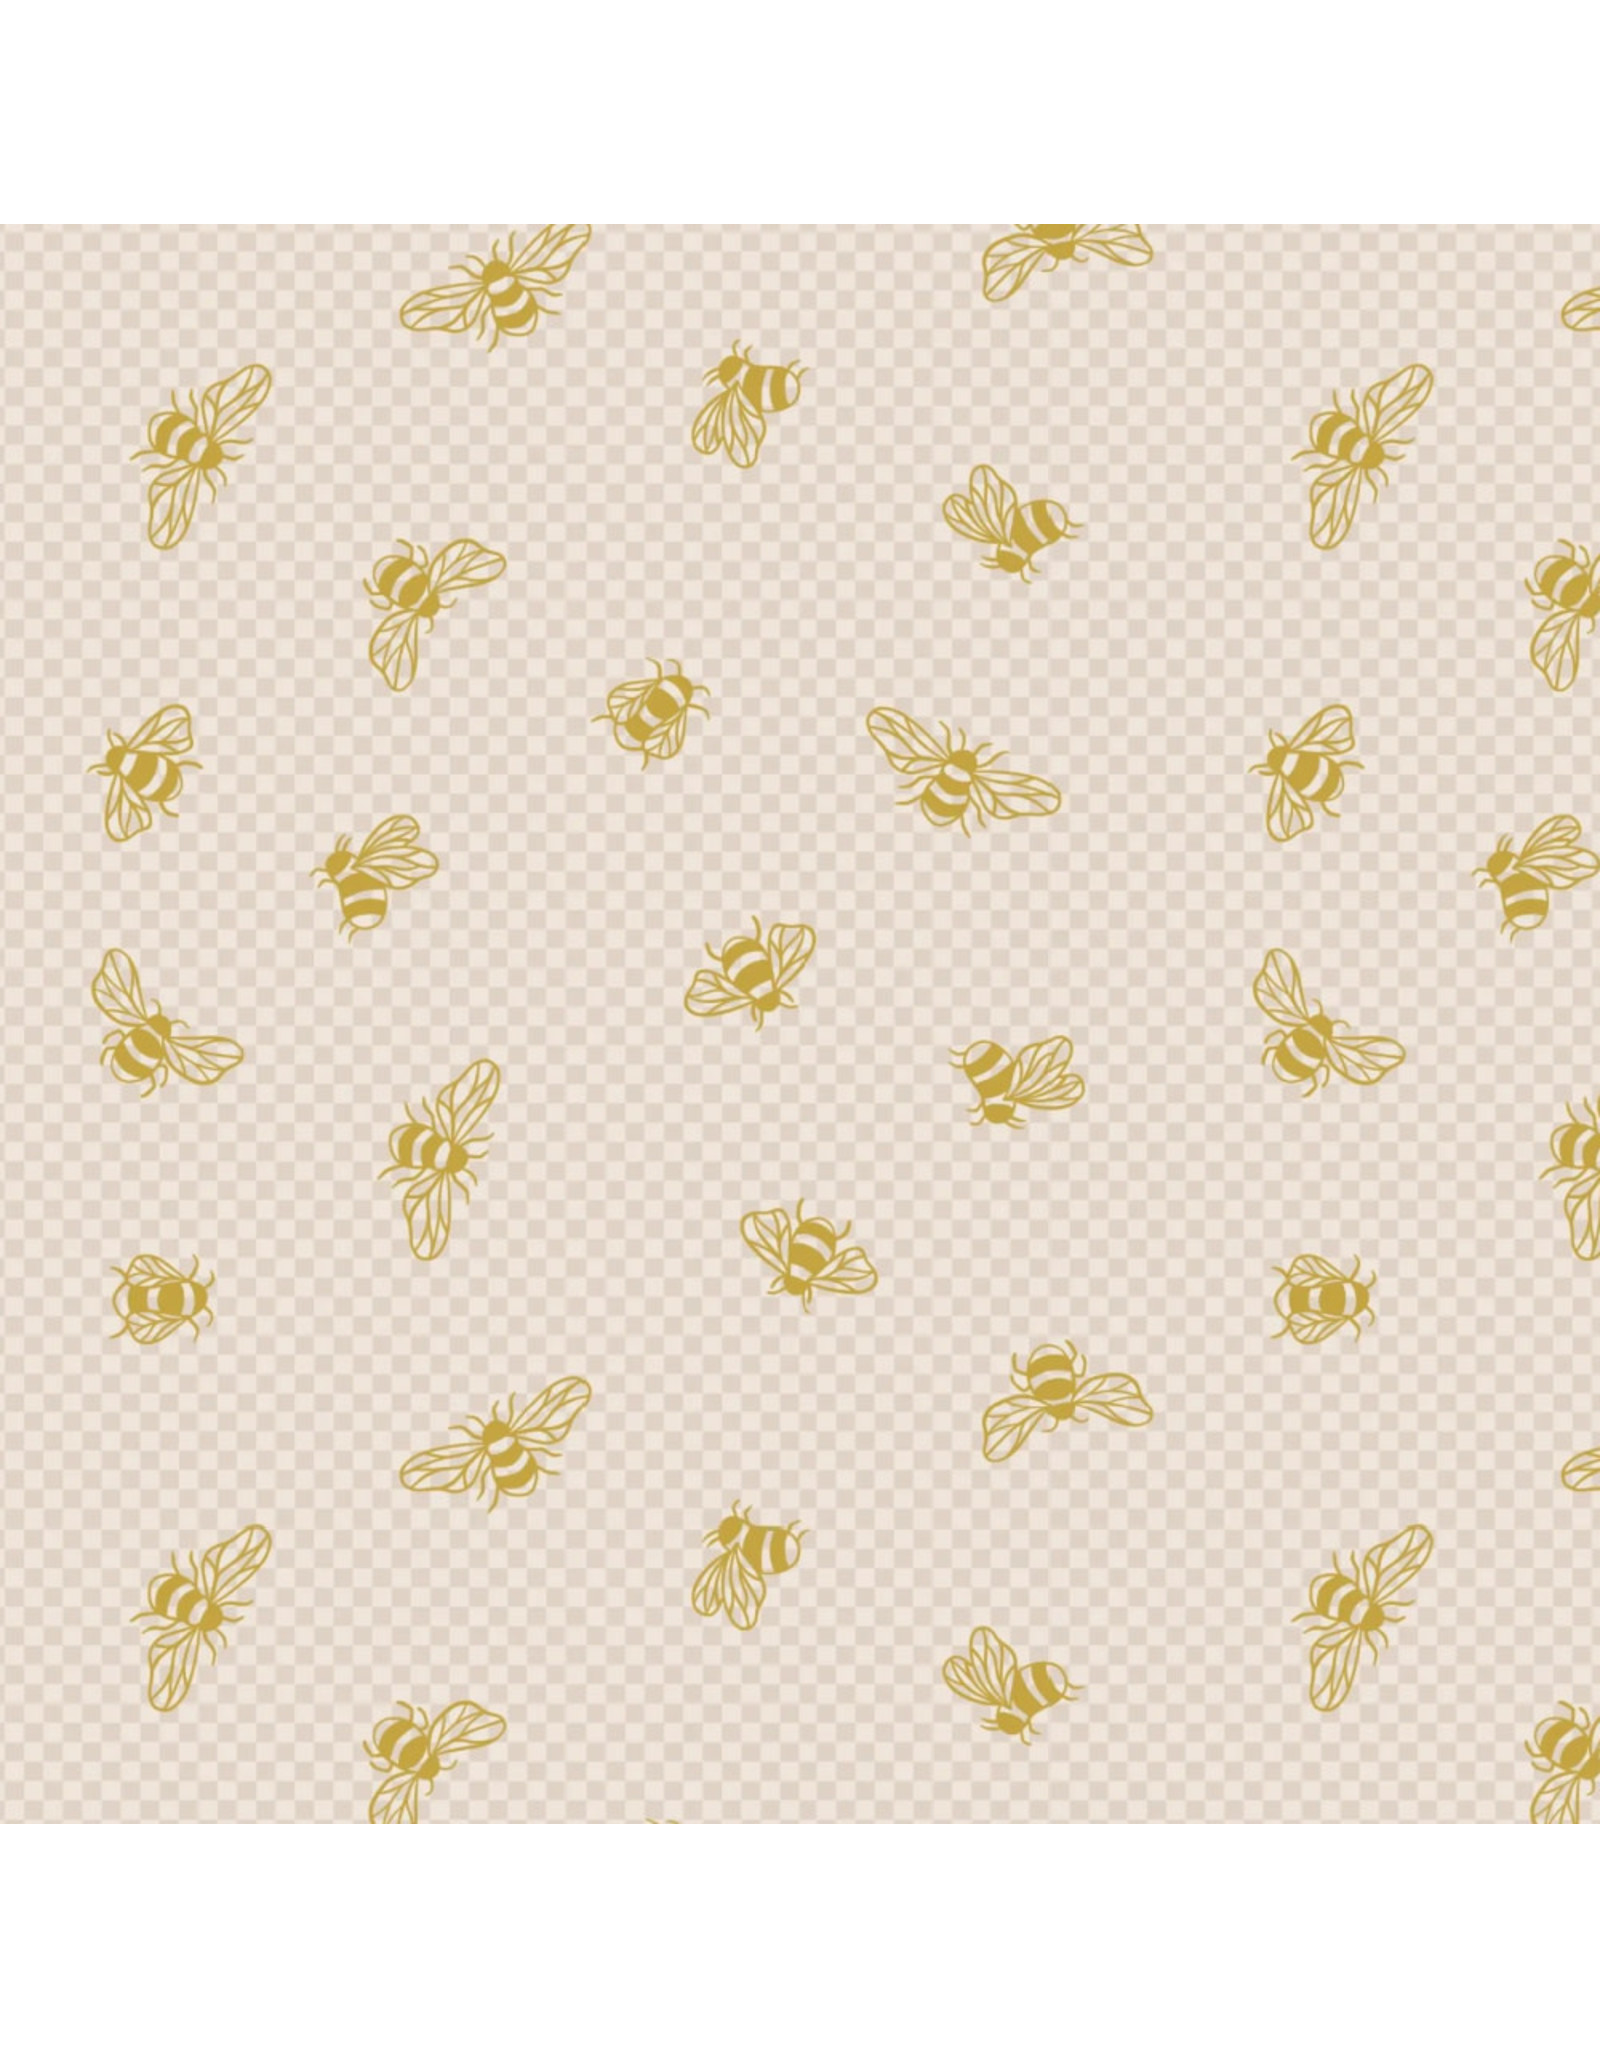 Lewis & Irene Honey Bee, Metallic Gold Bees on Dark Cream, Fabric Half-Yards